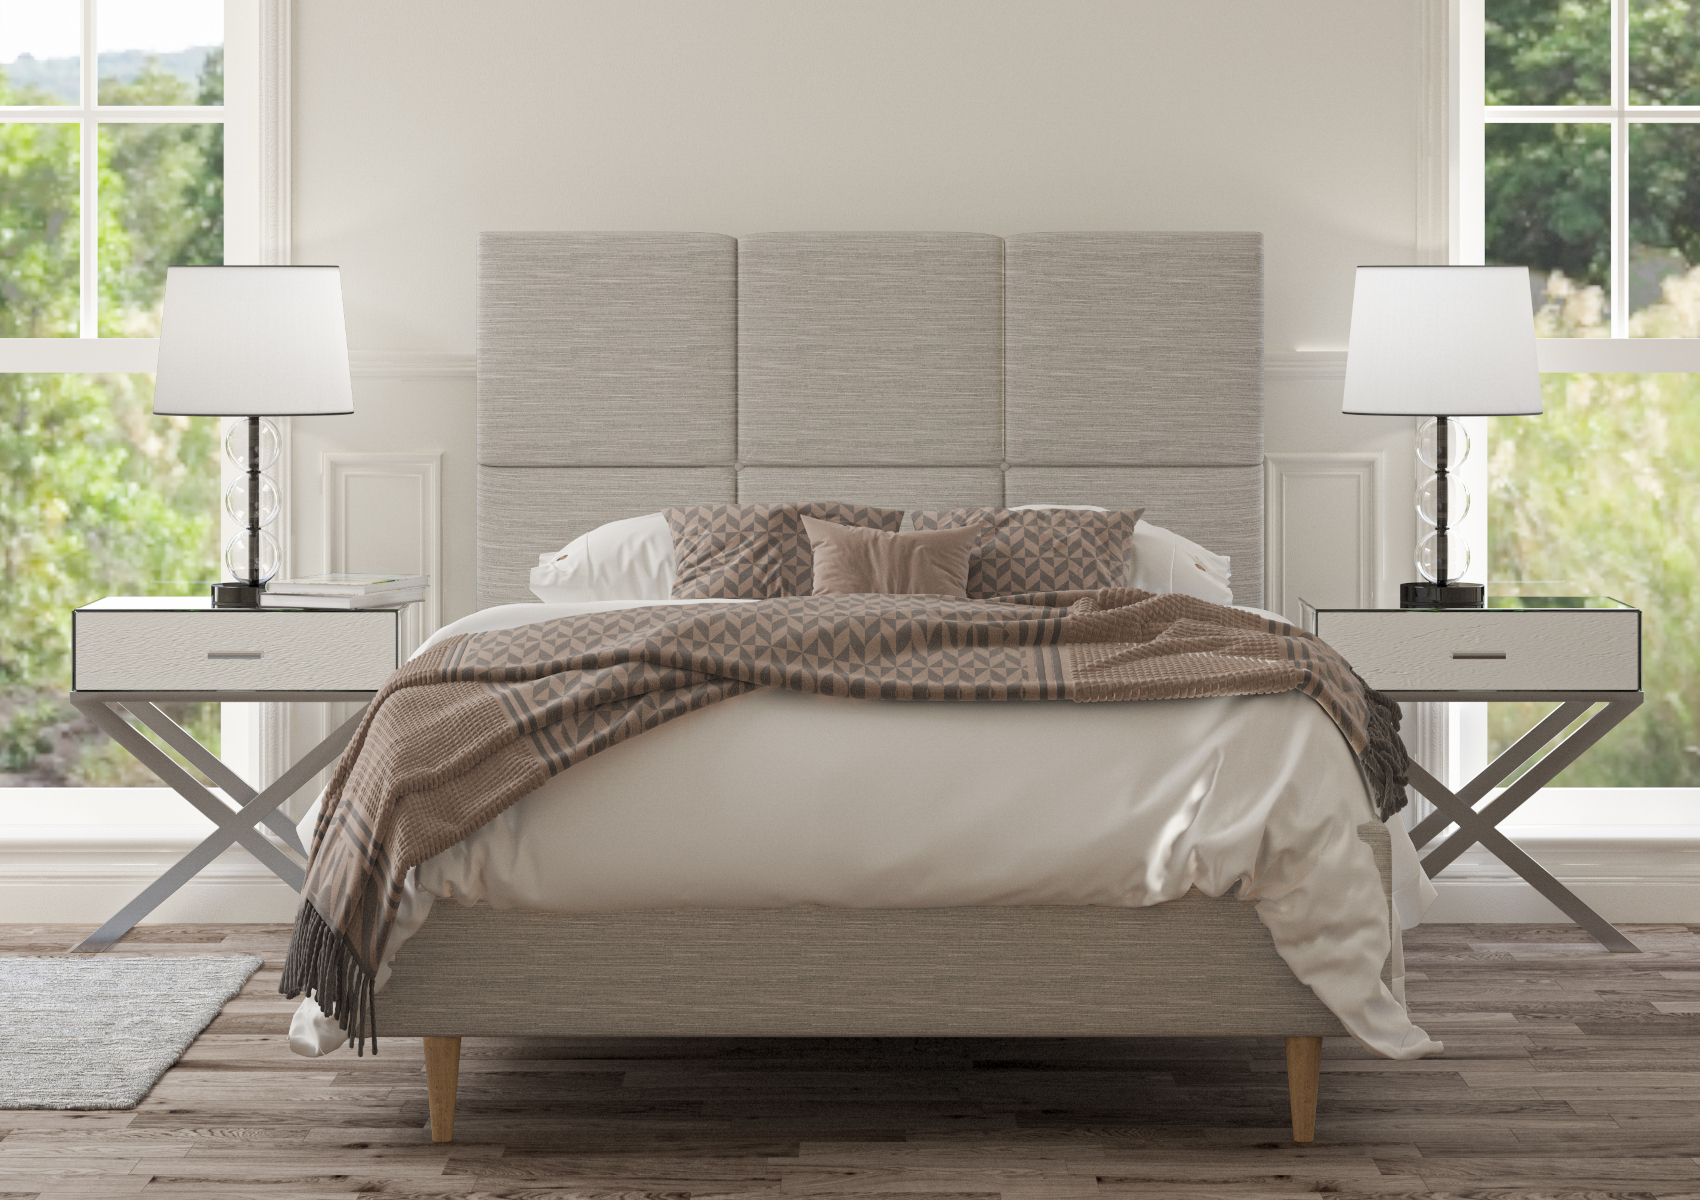 View Lauren Linea Fog Upholstered Super King Bed Time4Sleep information